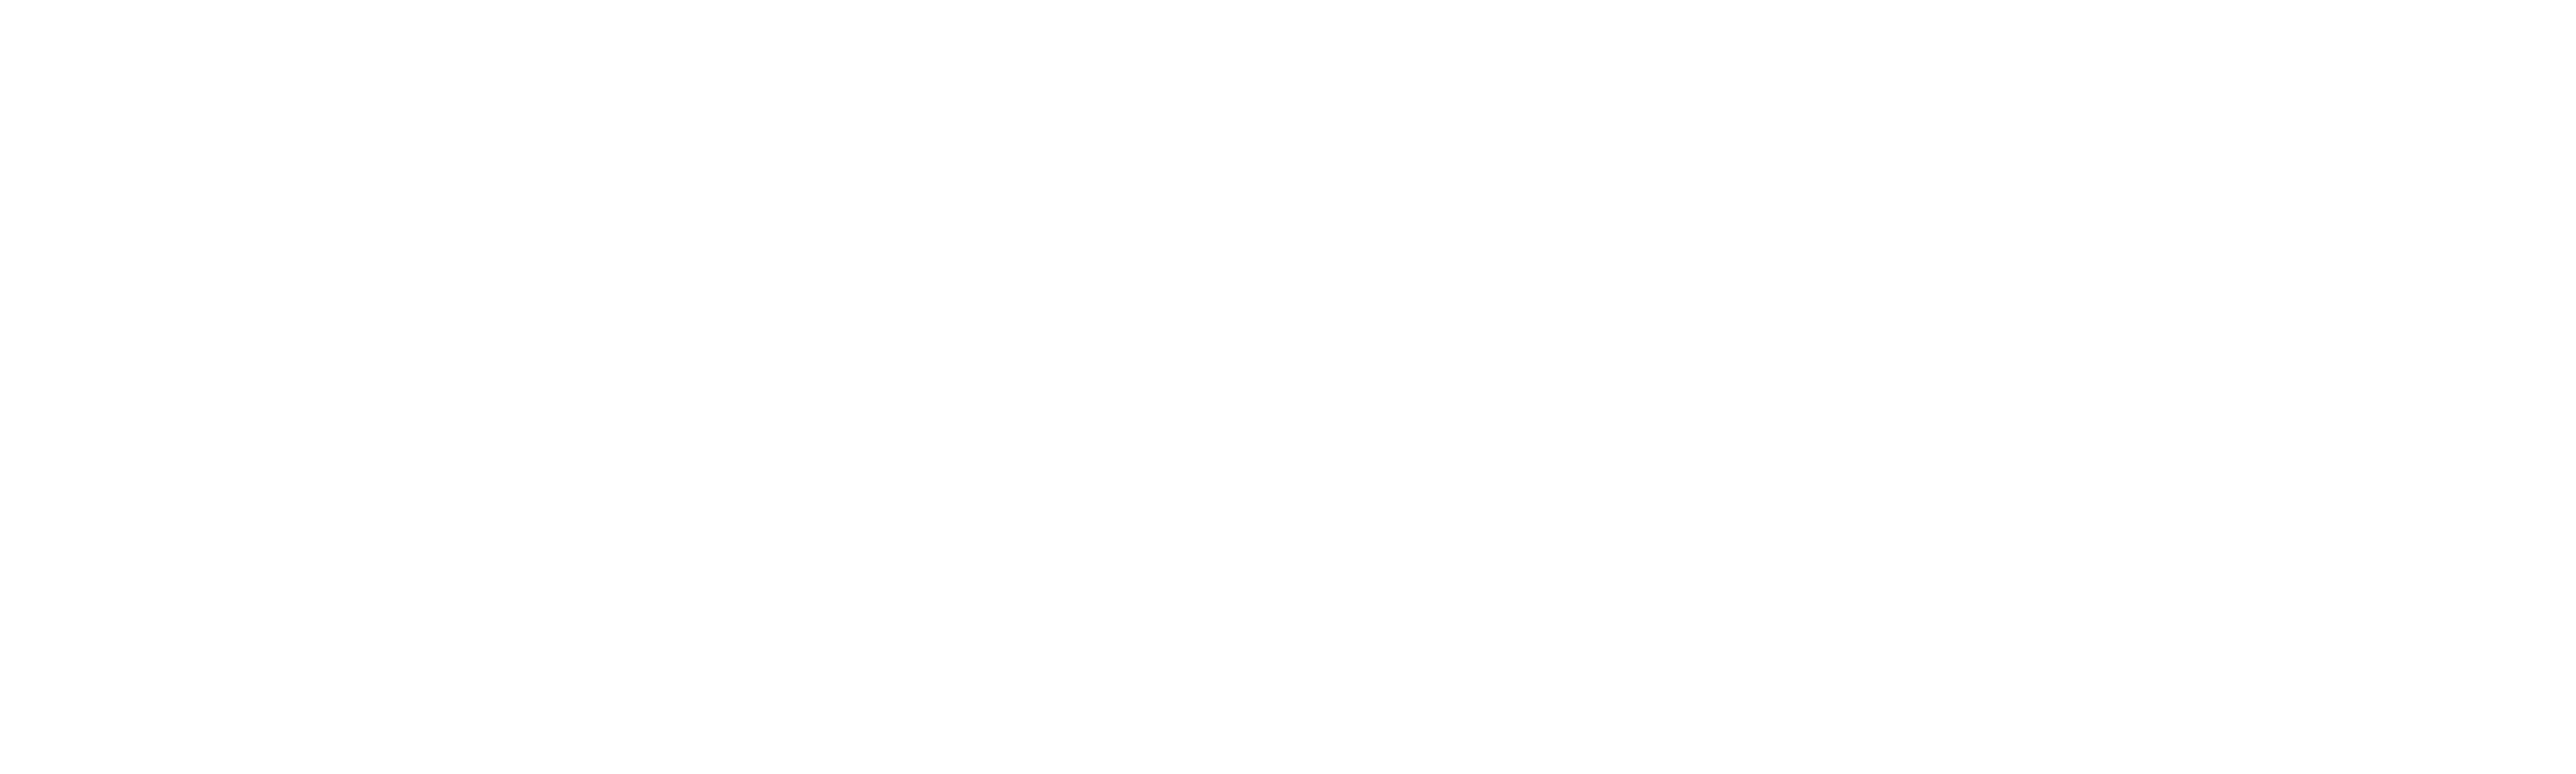 Silverline Trailers of Cleburne, TX Logo